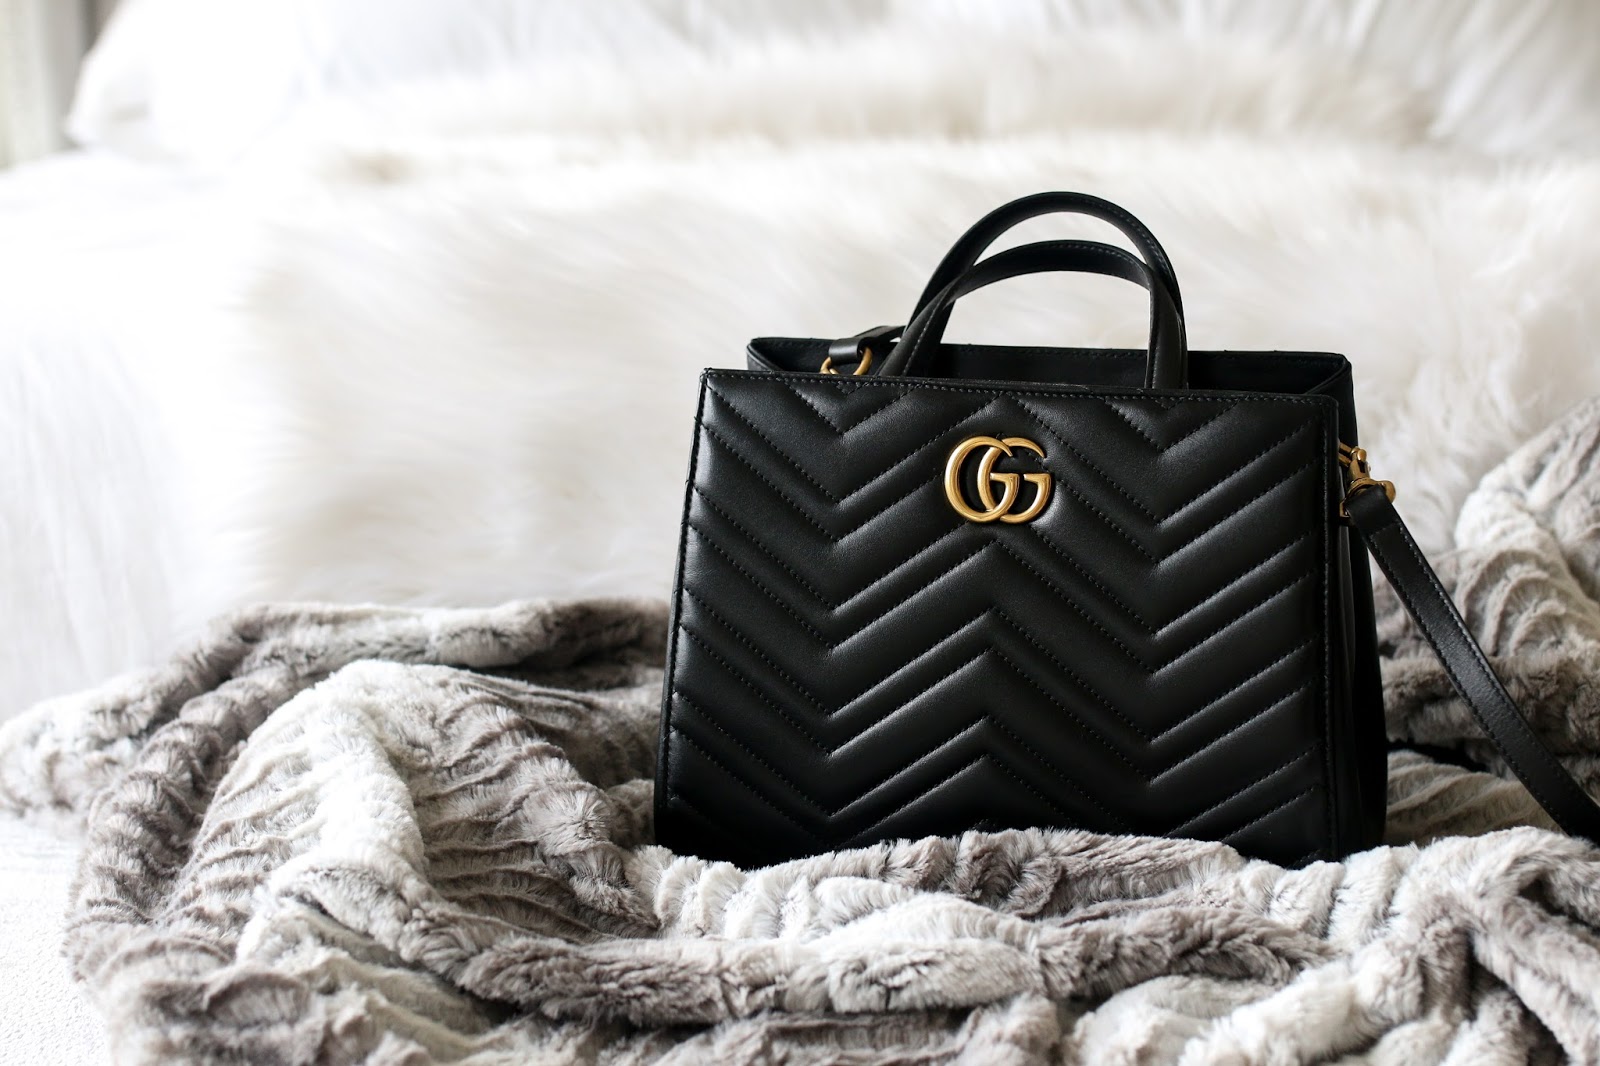 Bag Review: Gucci Small Marmont Top Handle Satchel - alittlebitetc